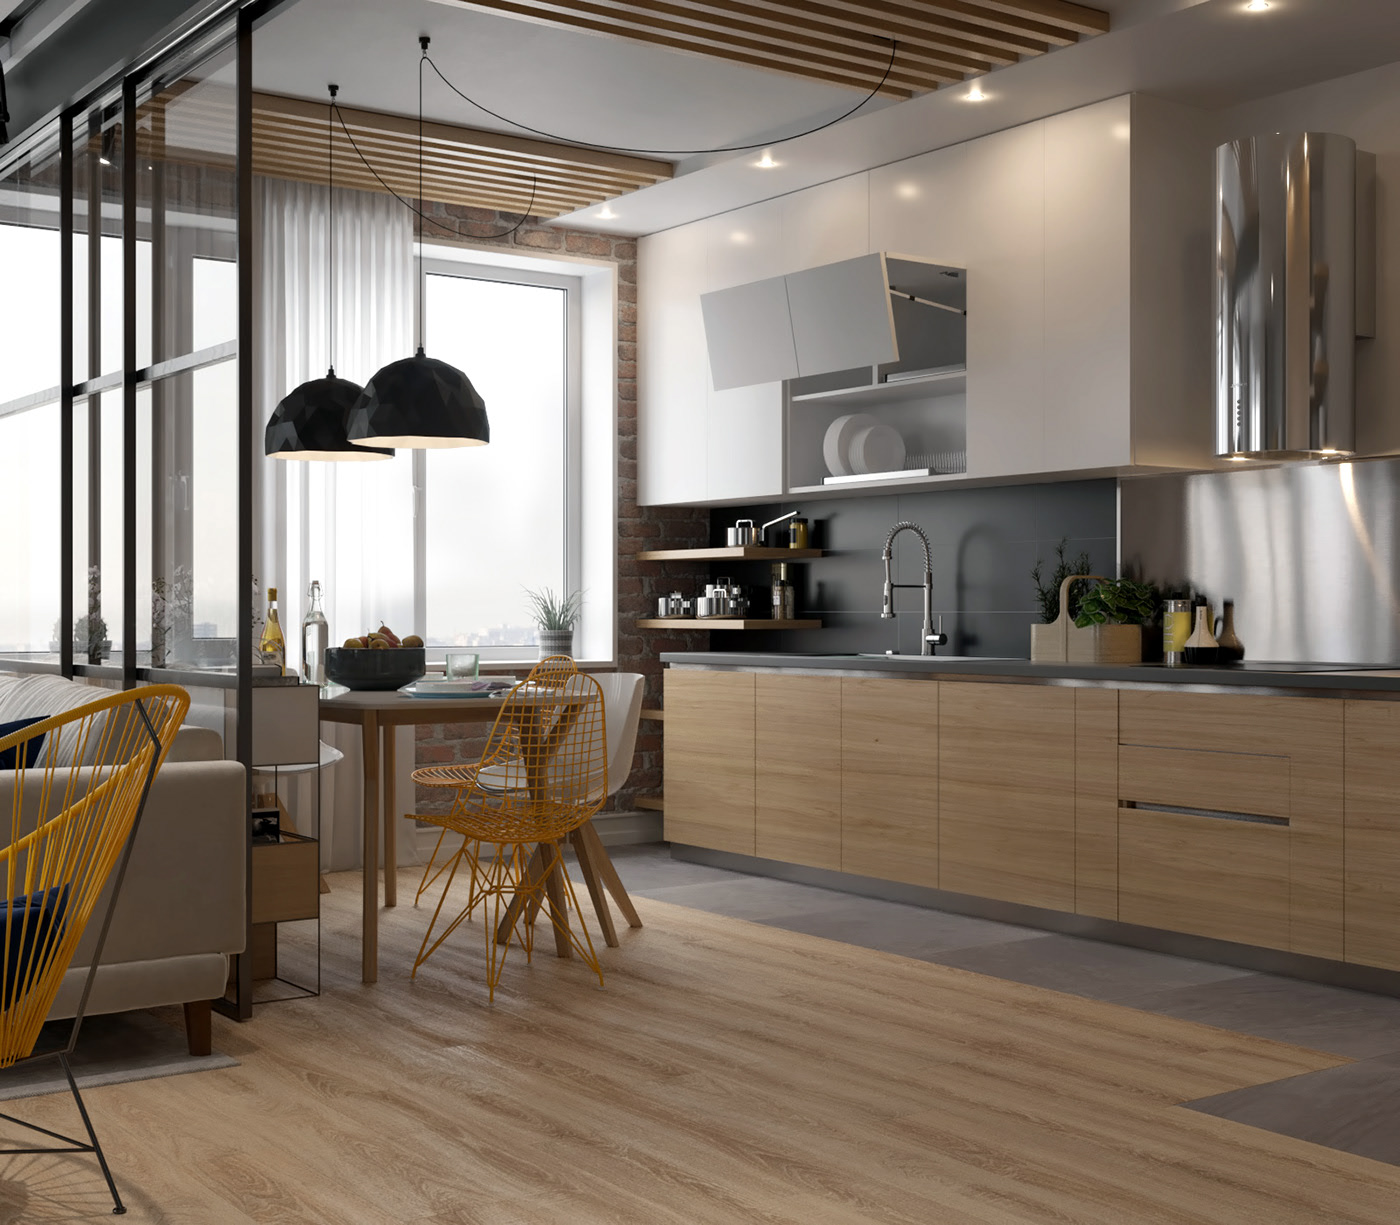 Kitchen-living room on Behance